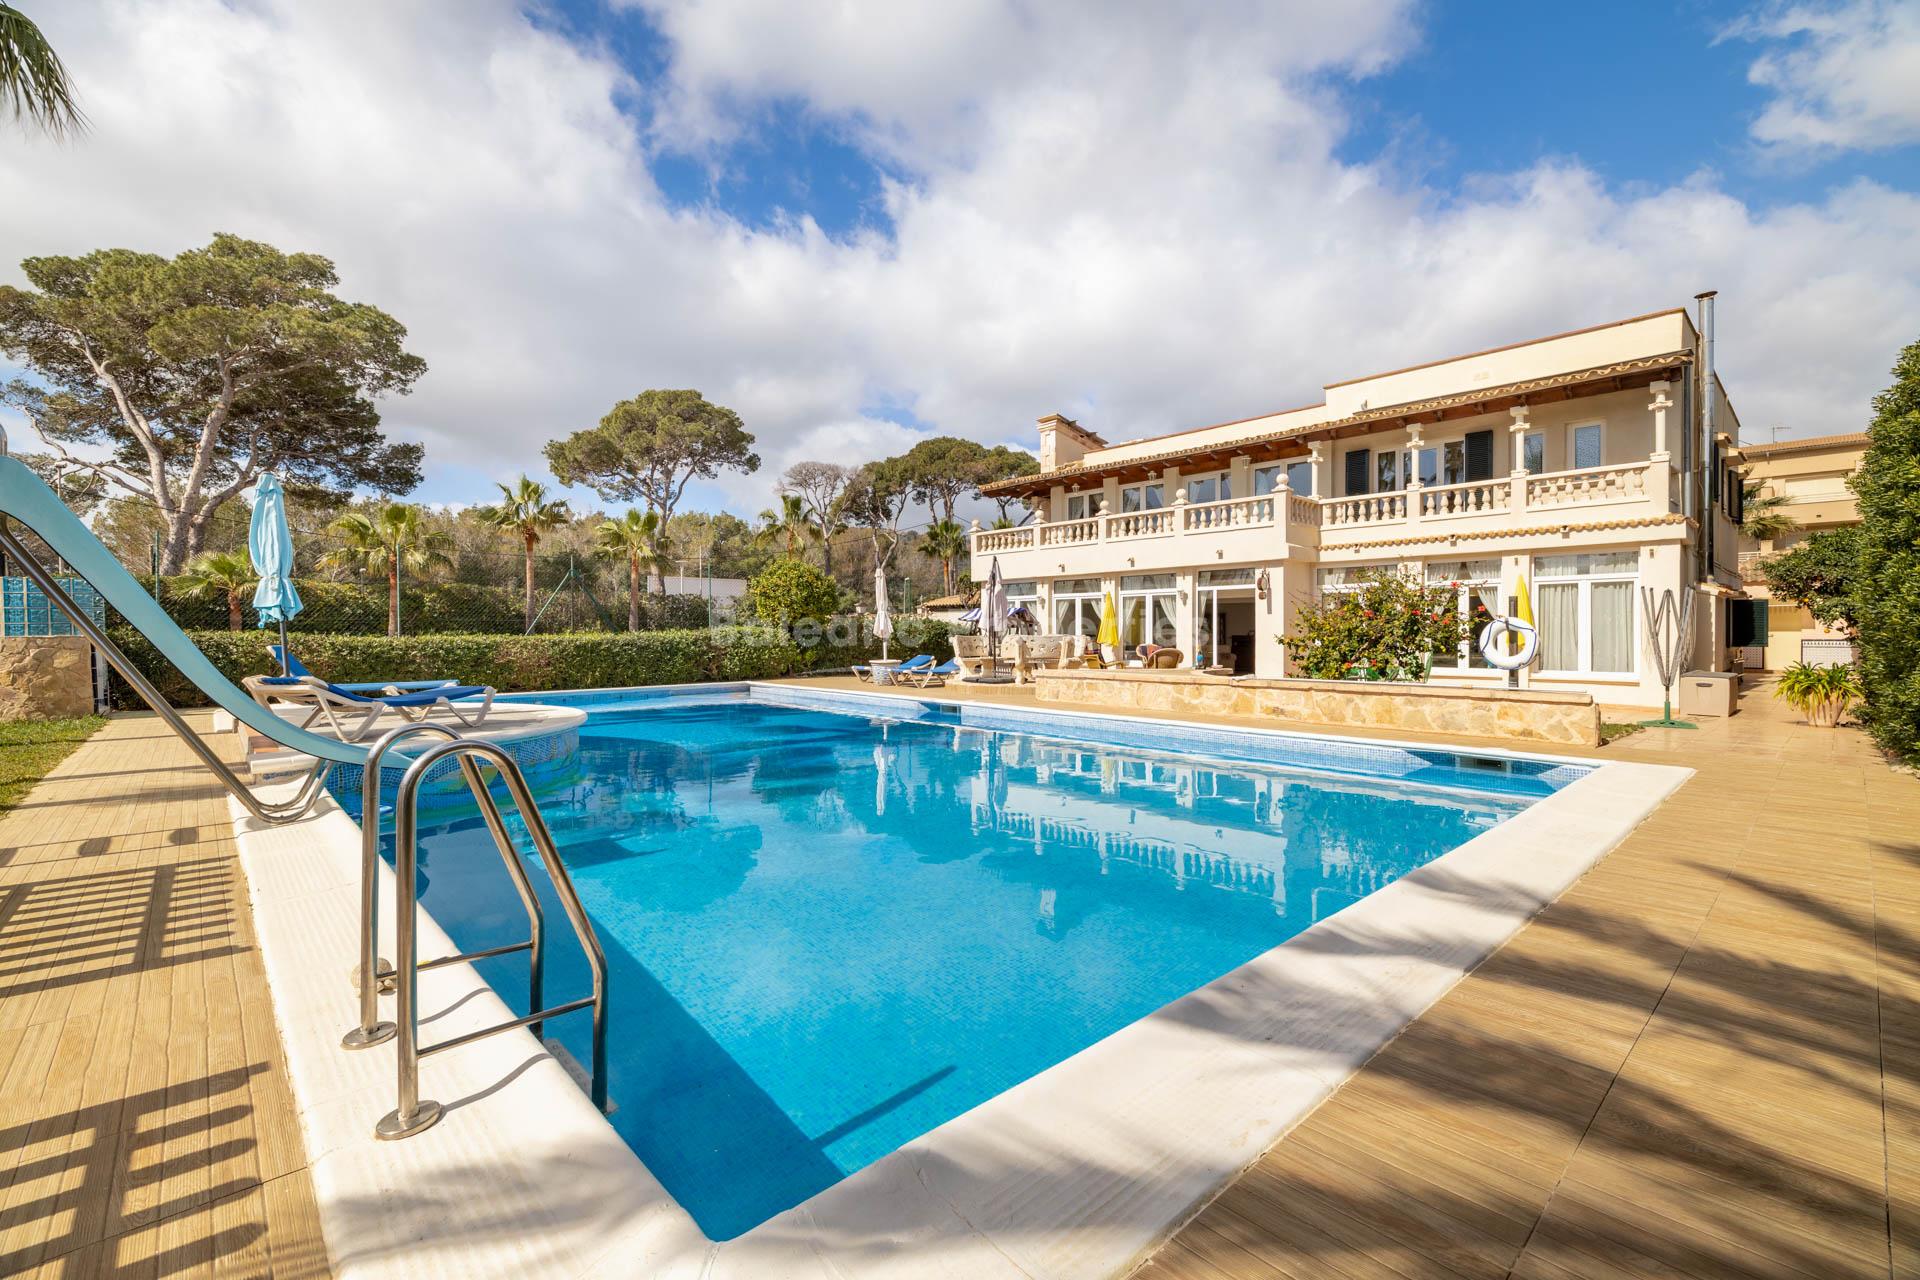 Beautiful villa with tennis court for sale near the beach in Cala Millor, Mallorca